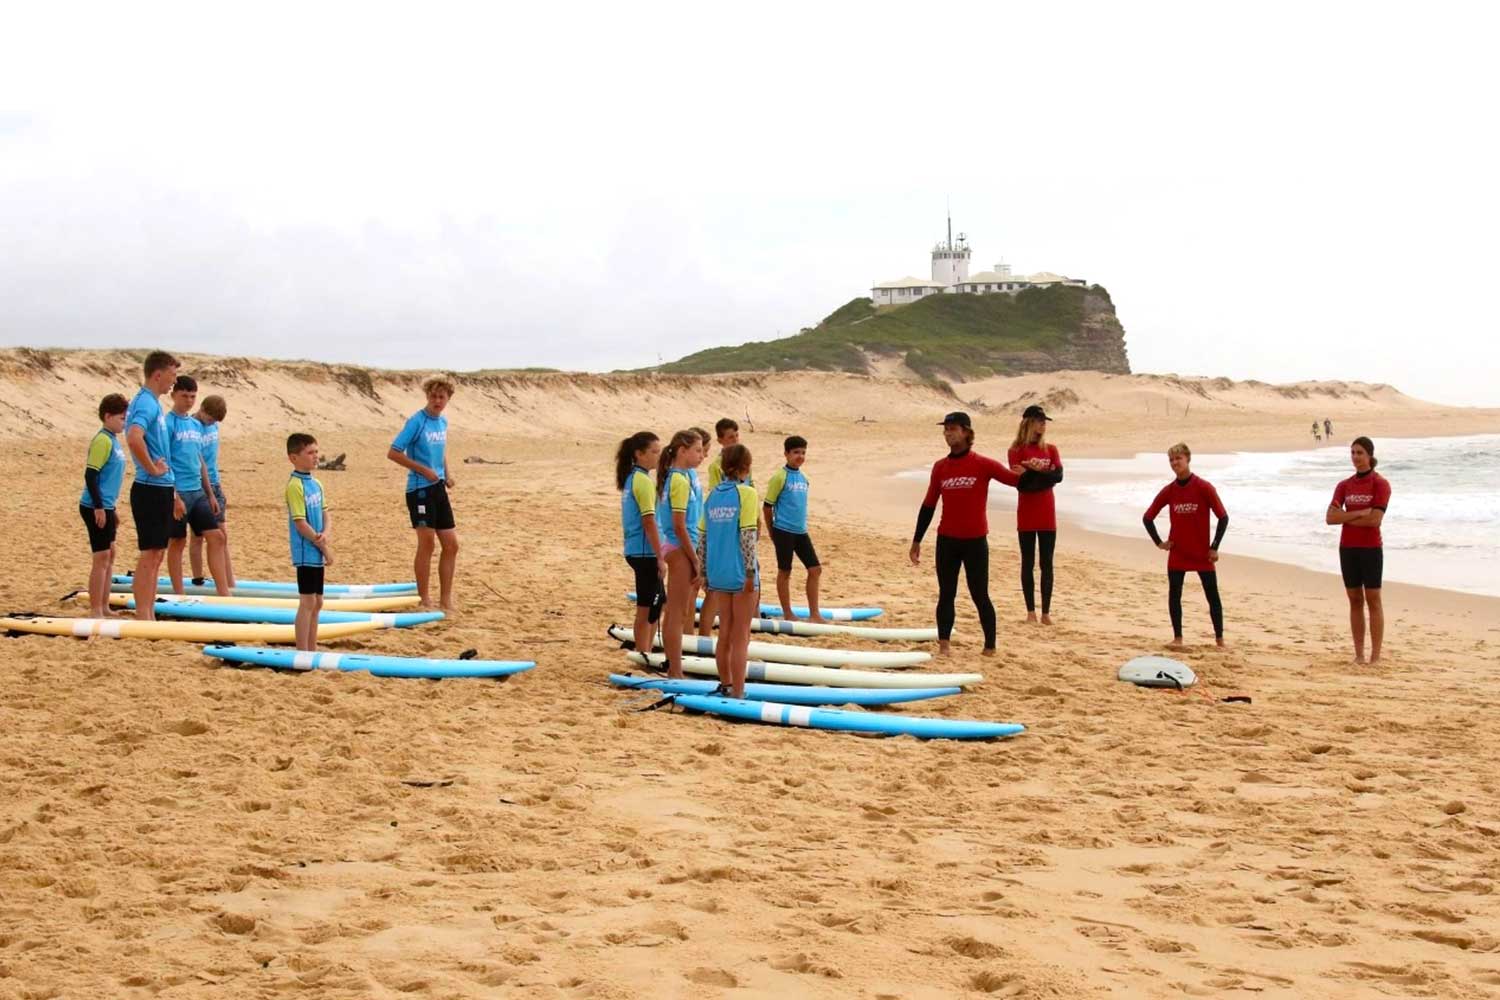 Newcastle Surf School